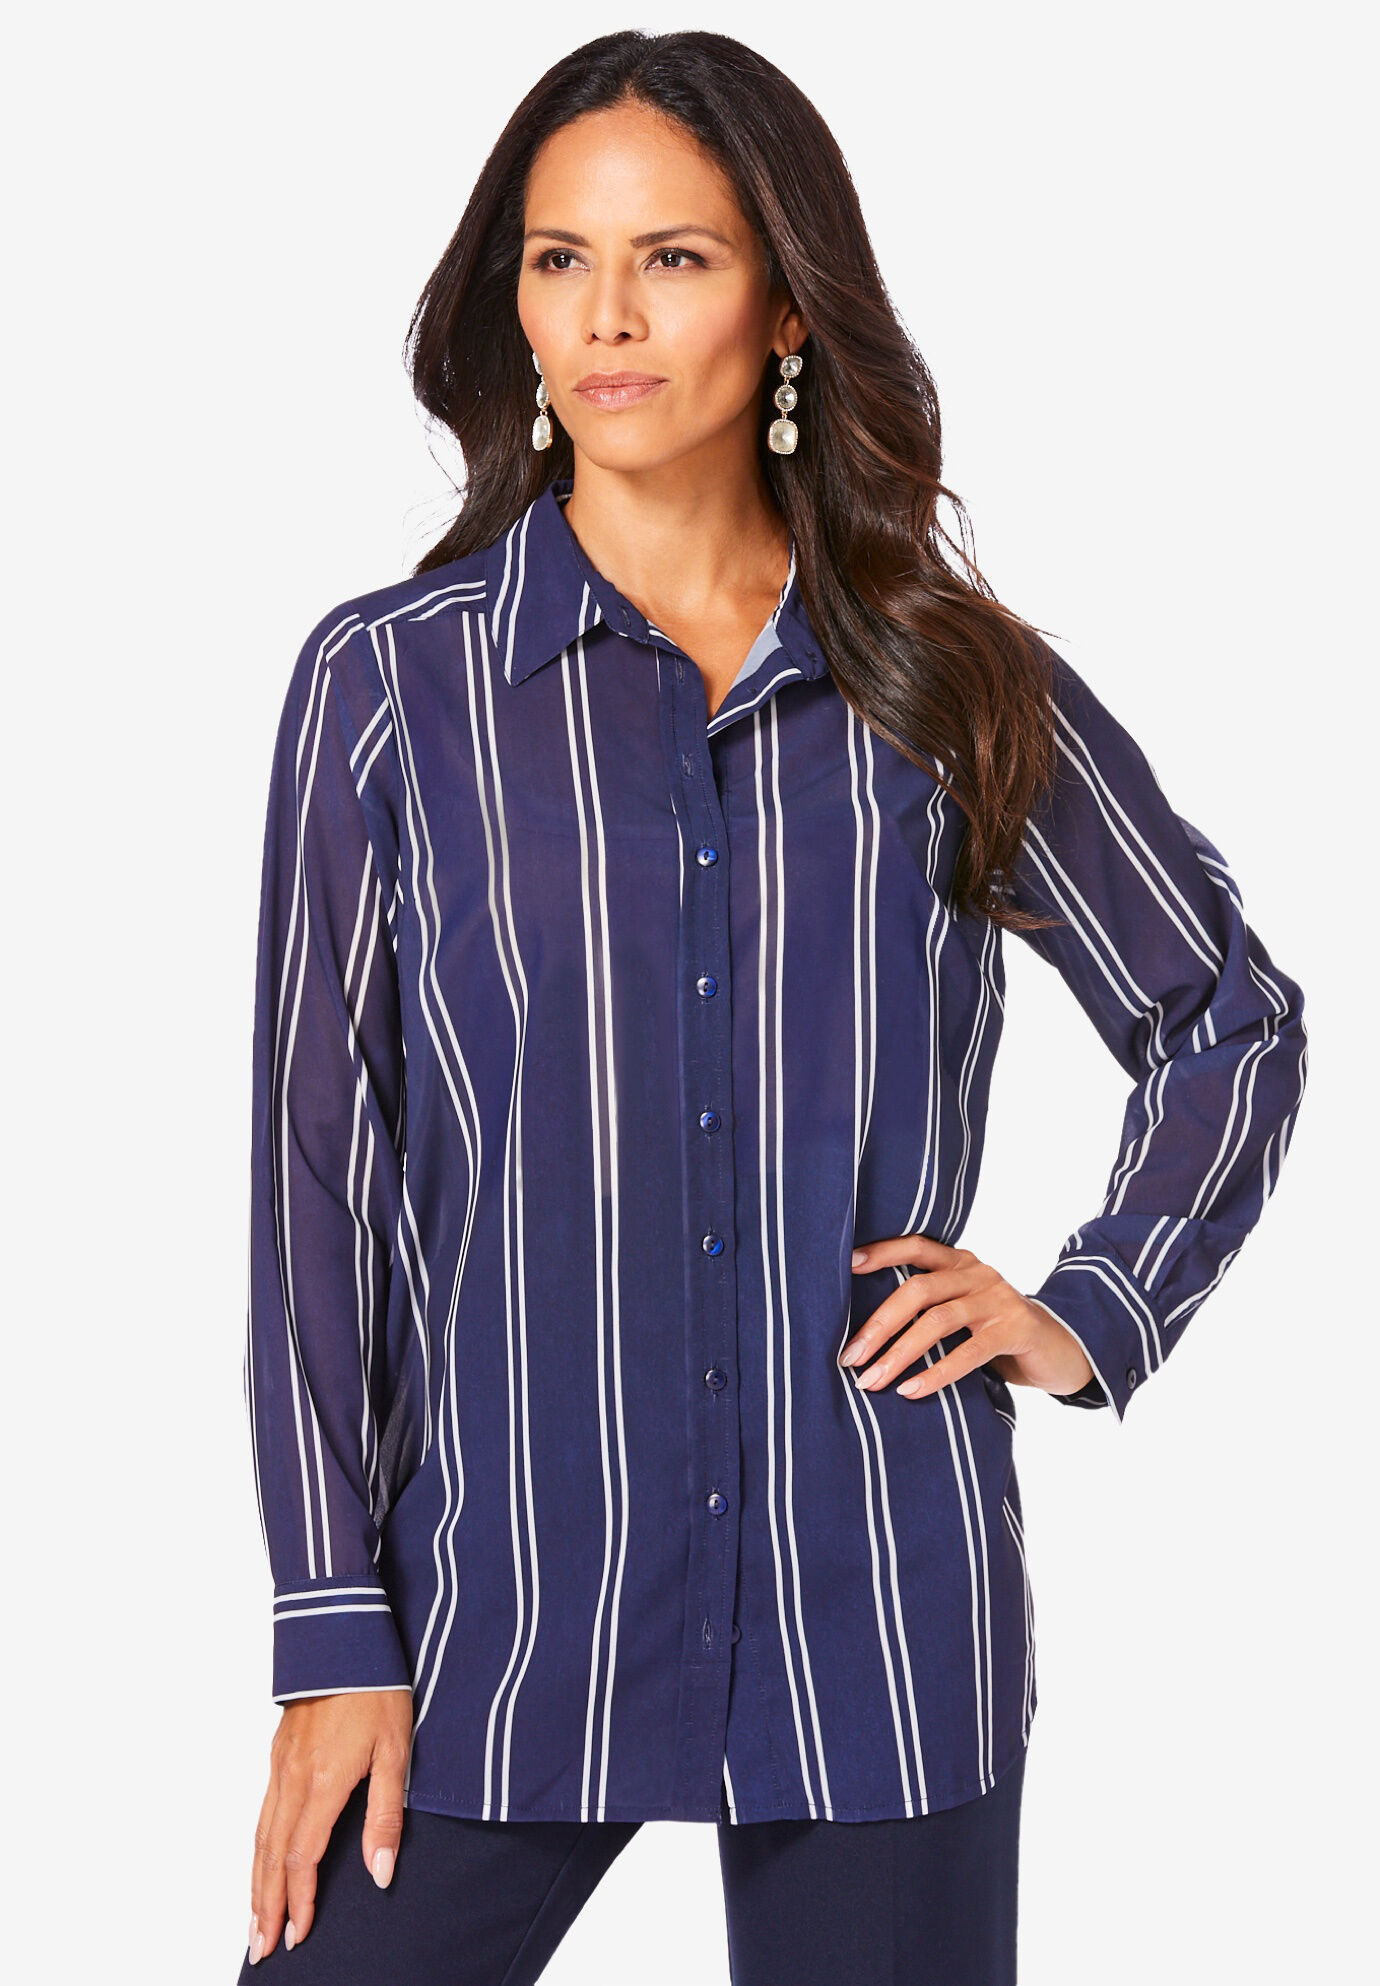 NEW Roamans Ladies Long Line Shirt Blouse Top BLUE Stripe Crinkle 20 LAST ONE